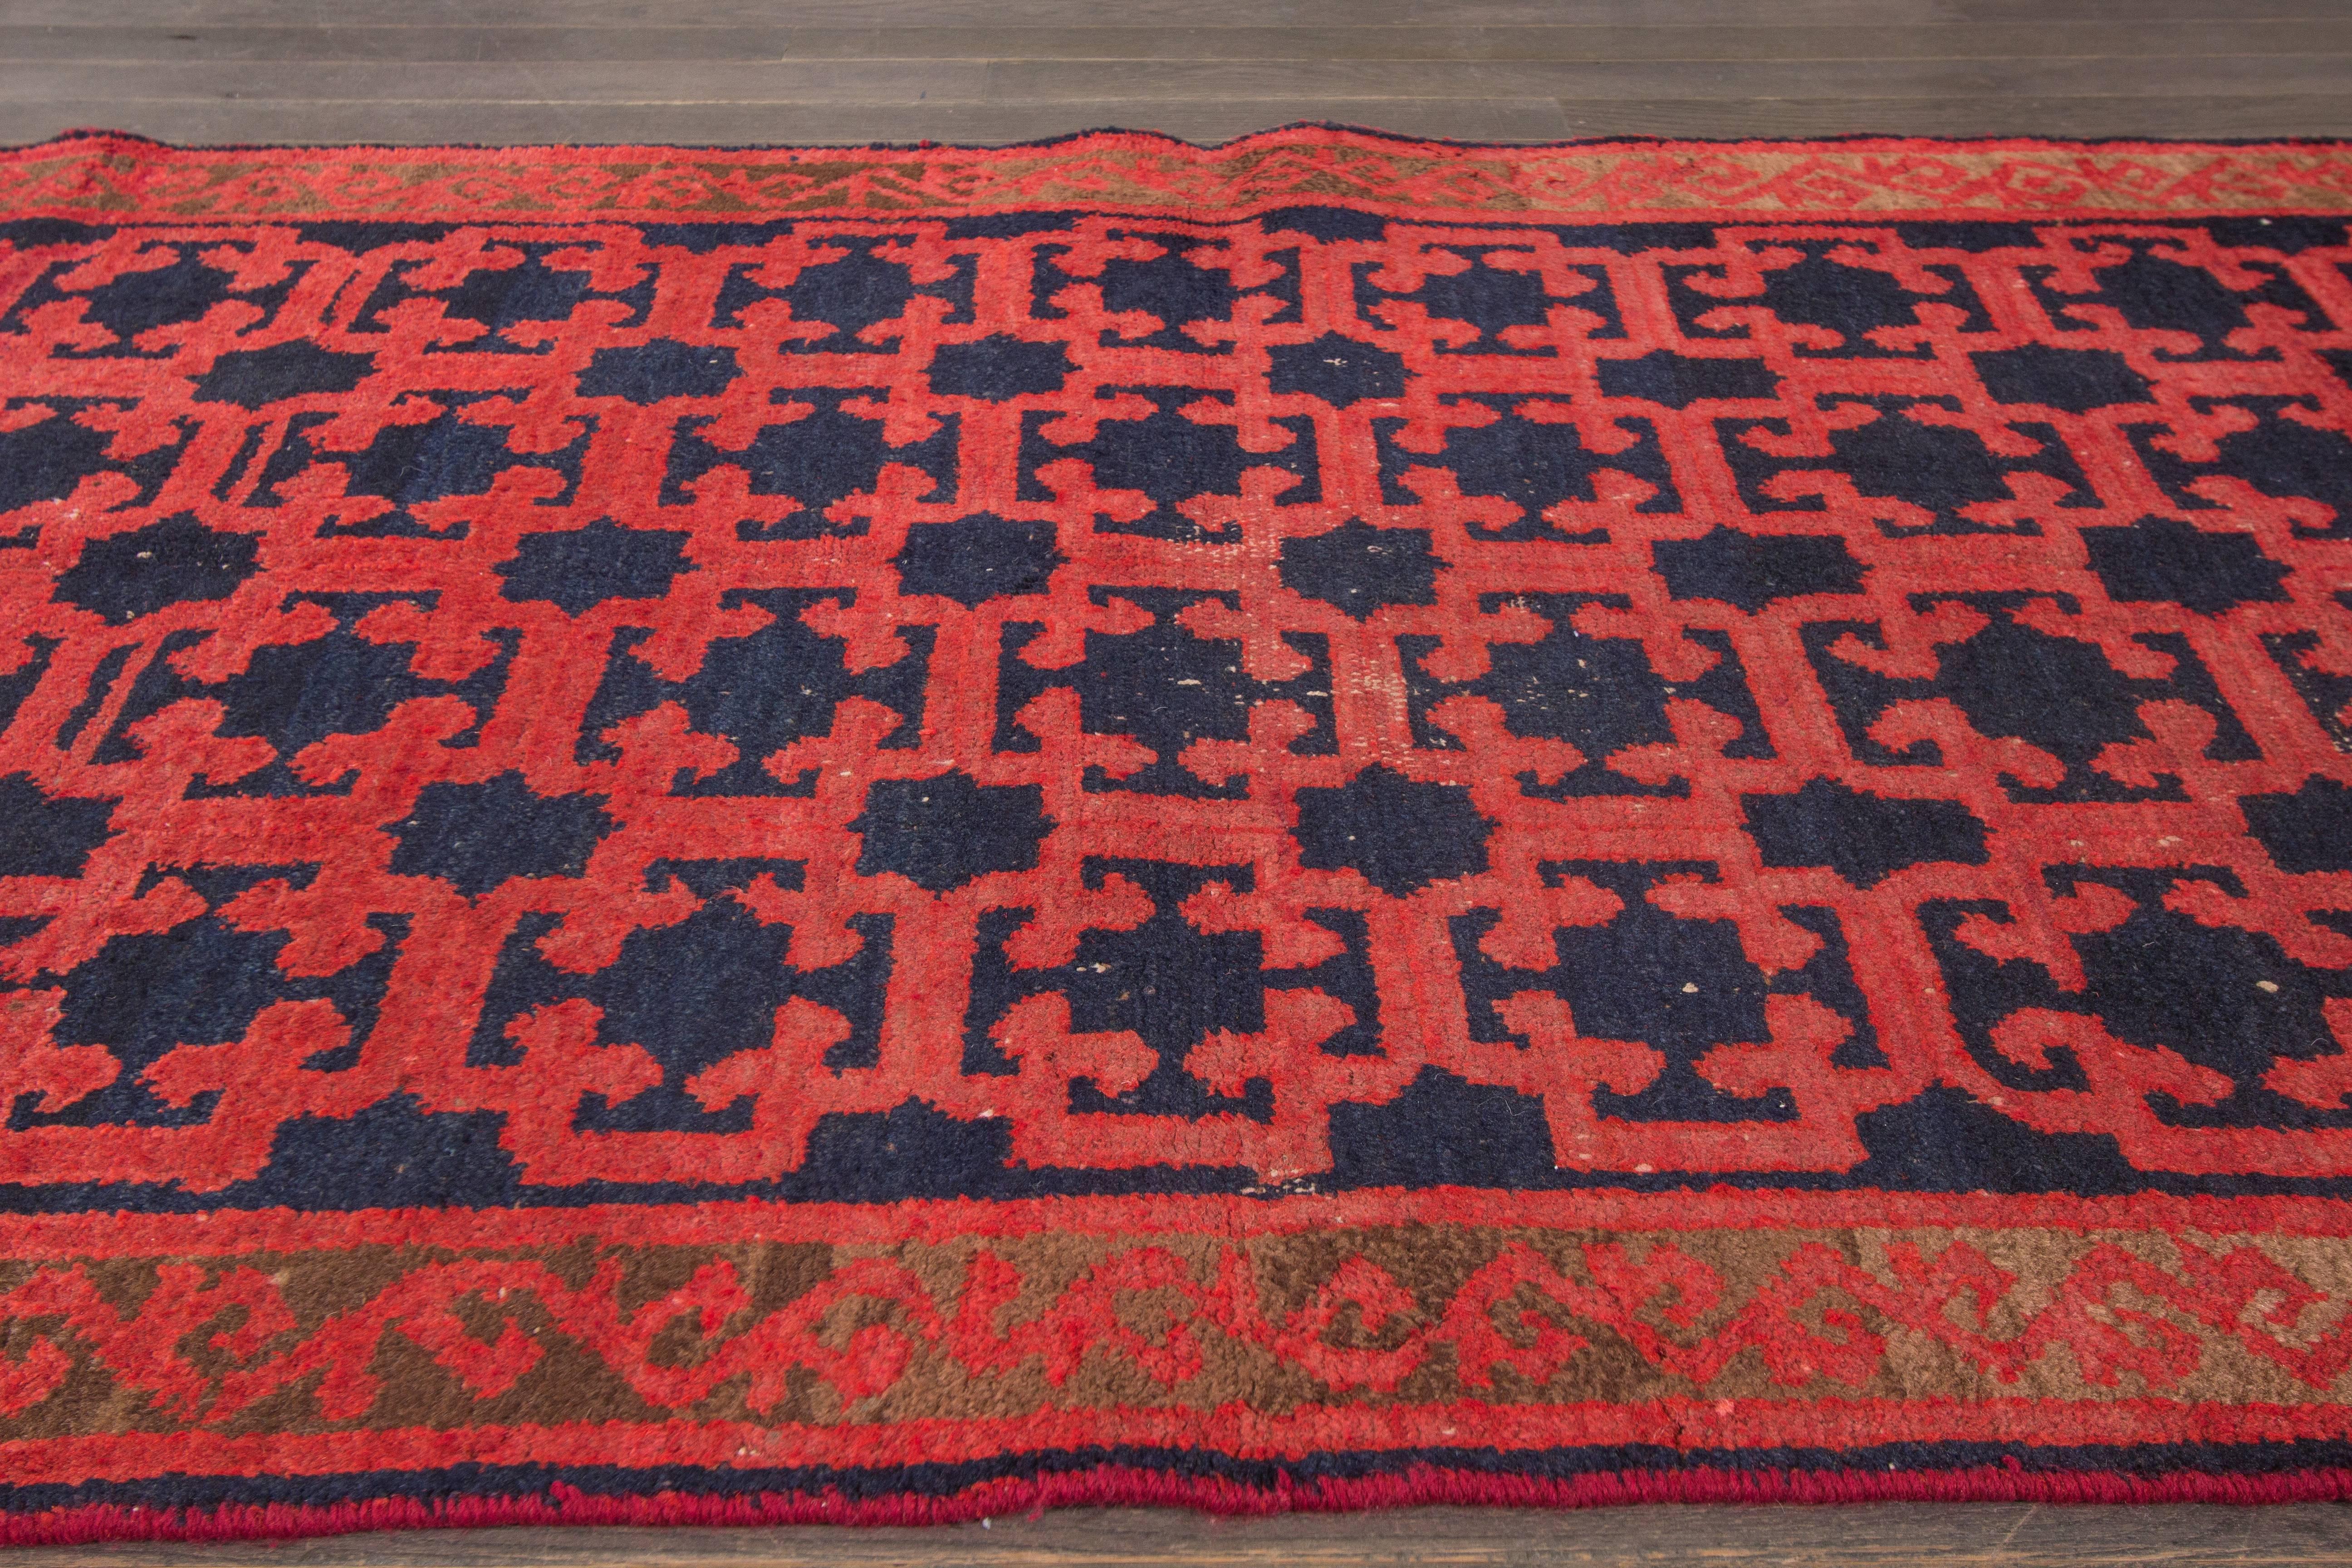 Early 20th Century Antique Turkish Khotan Carpet